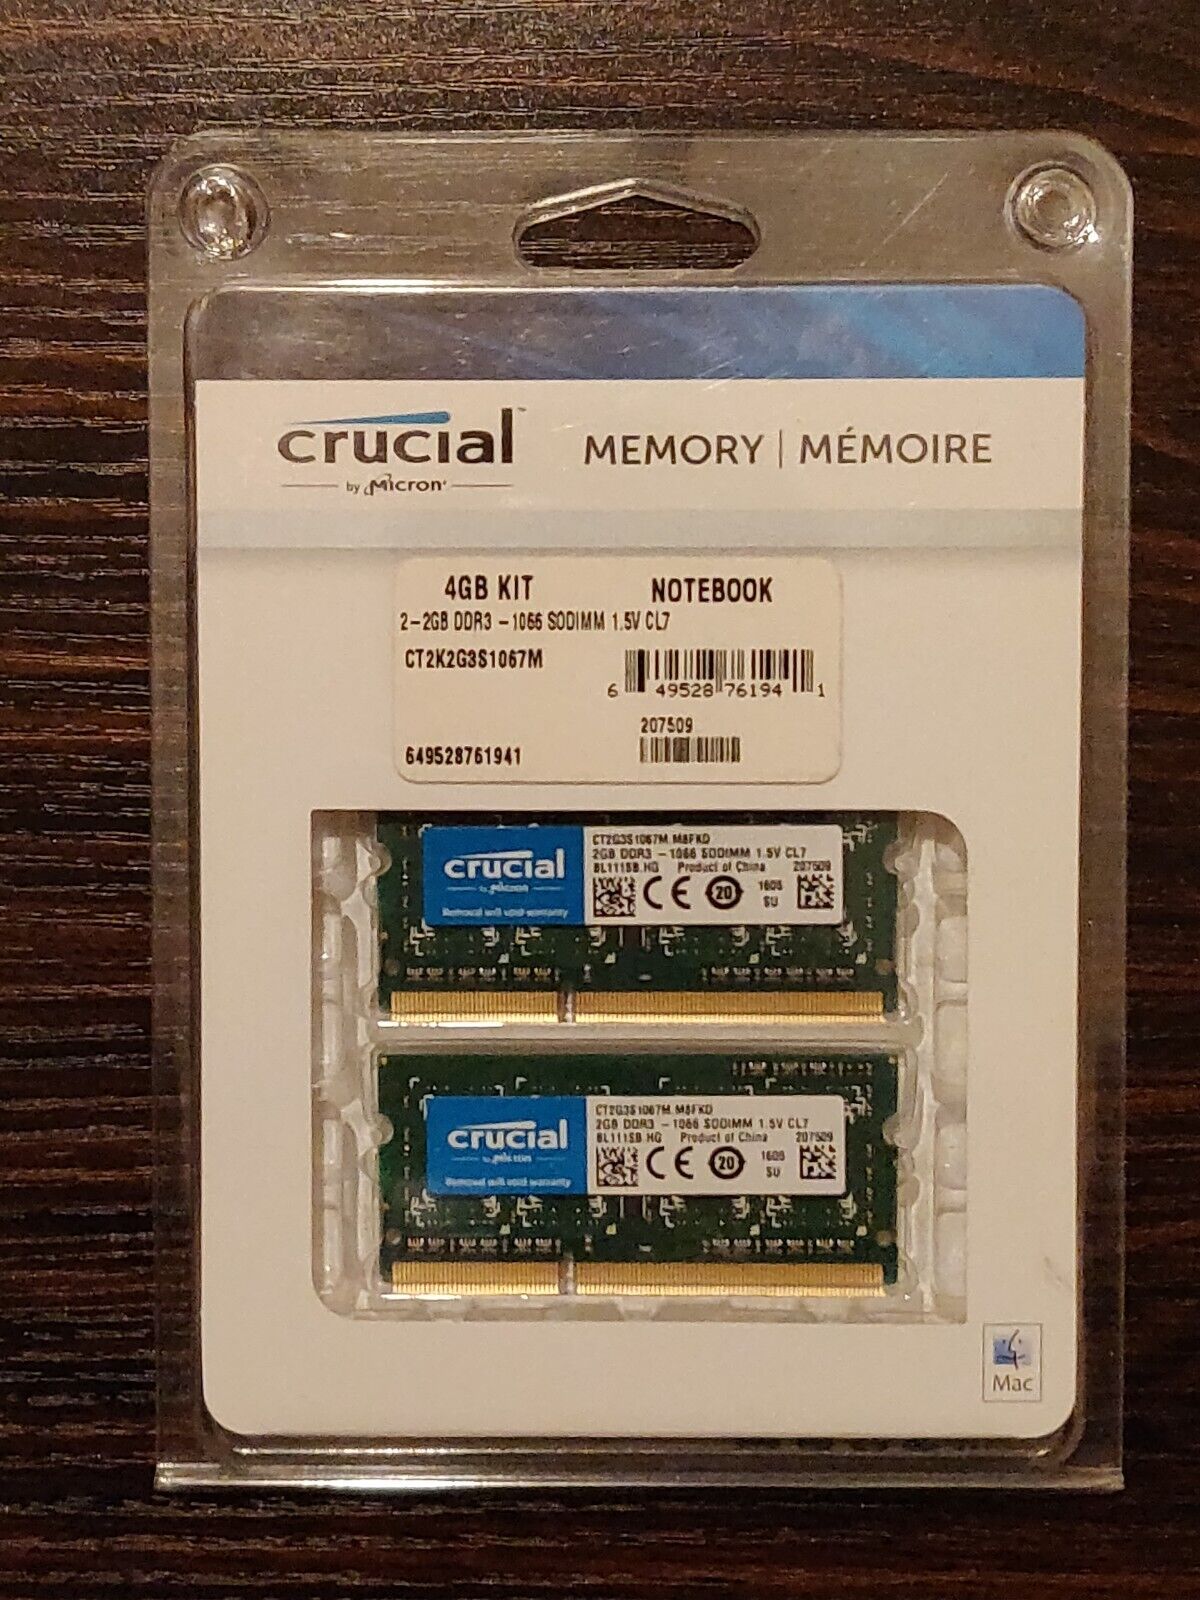 NIB Crucial by Micron Apple Mac Compatible Memory 4 GB (2GB x 2) Kit 